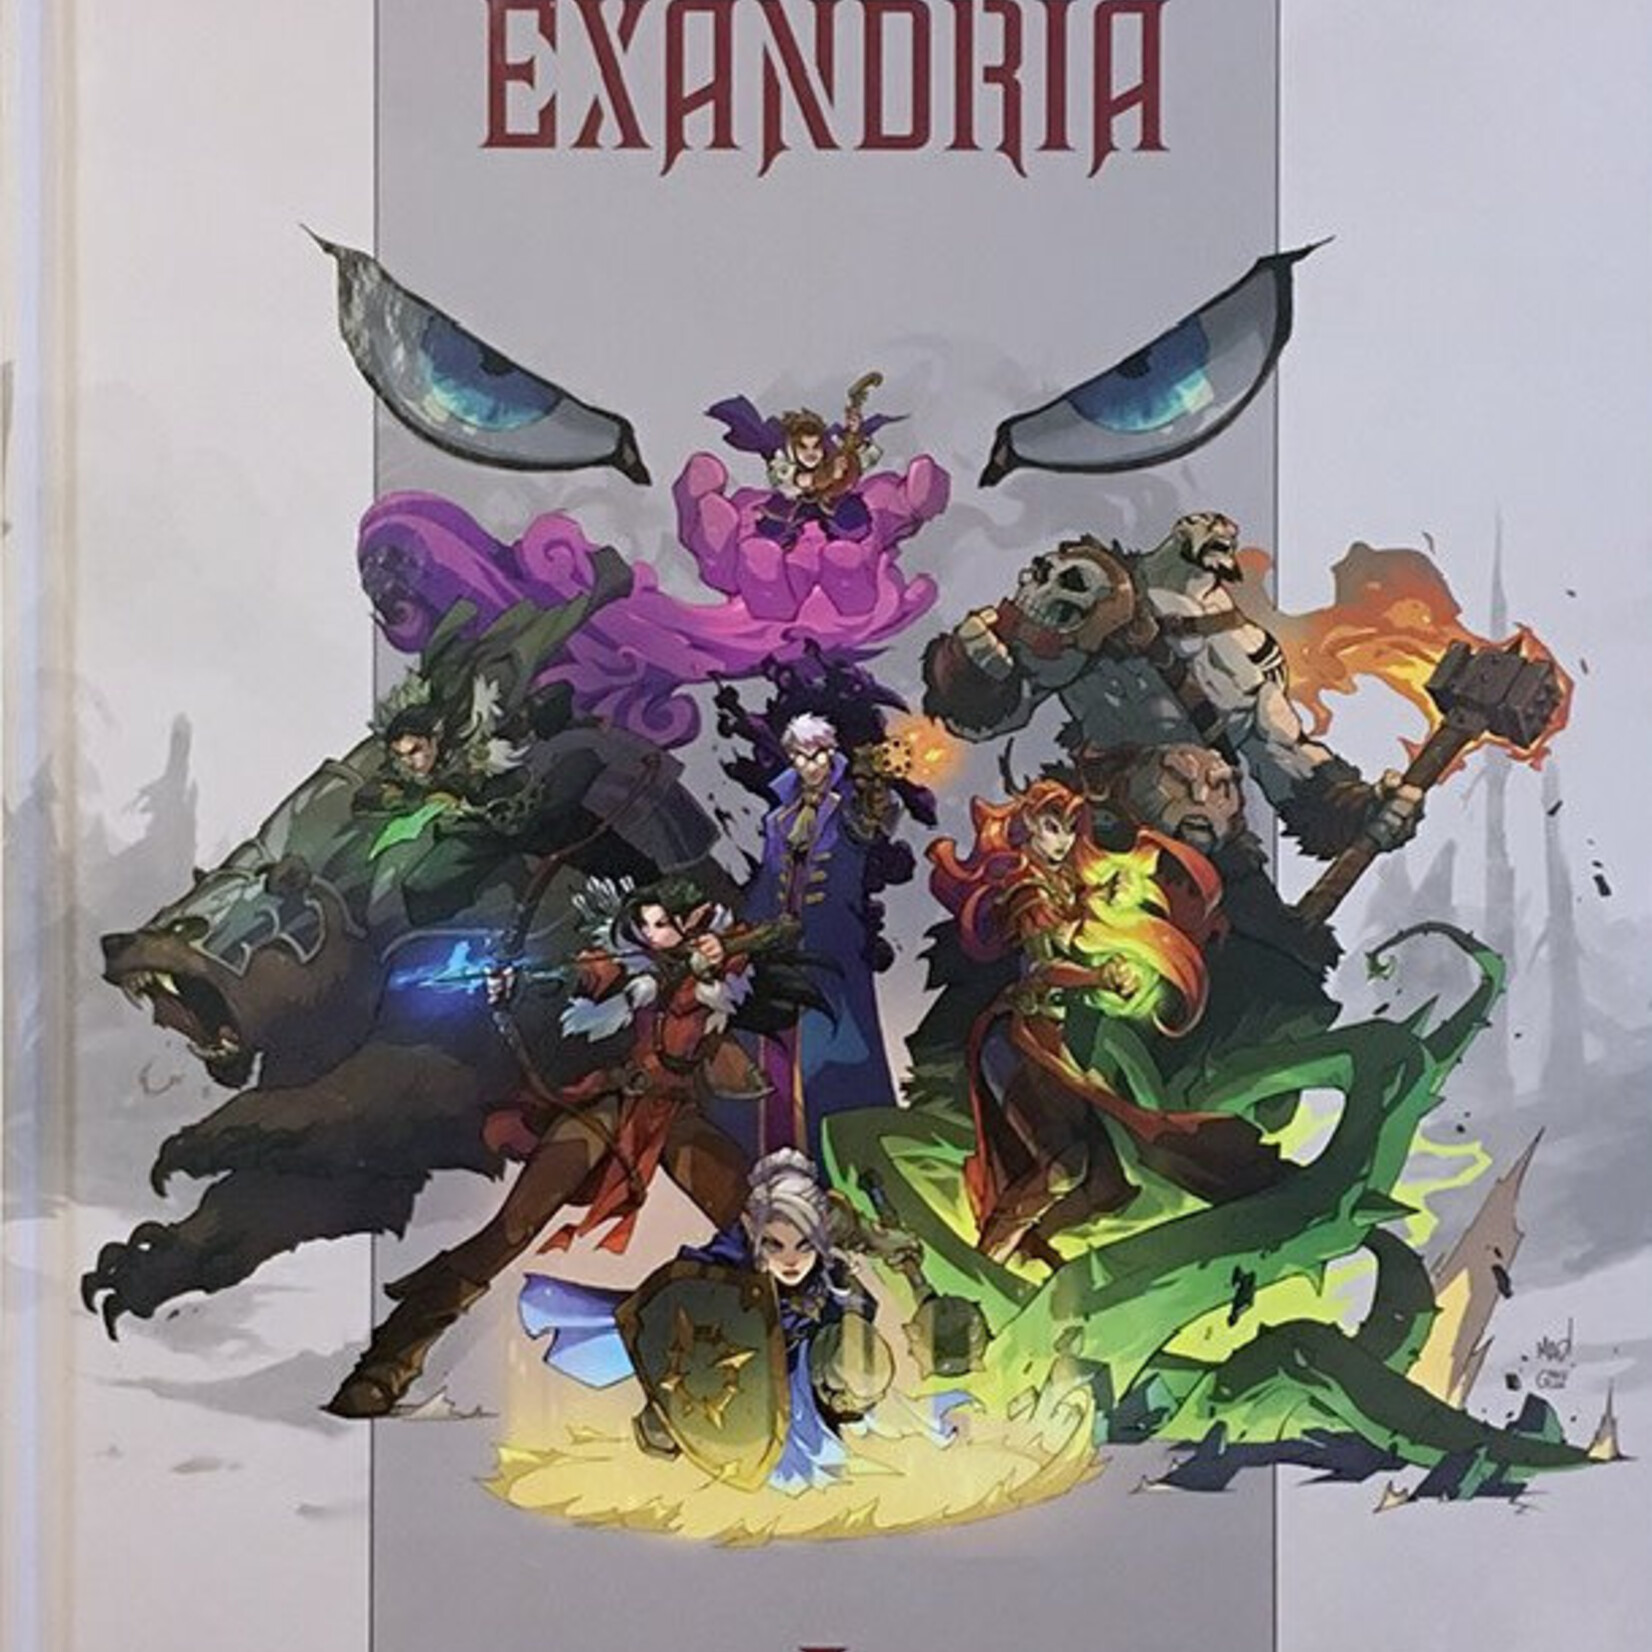 Darrington Press The Chronicles of Exandria Vol I: The Tale of Vox Machina Art Book